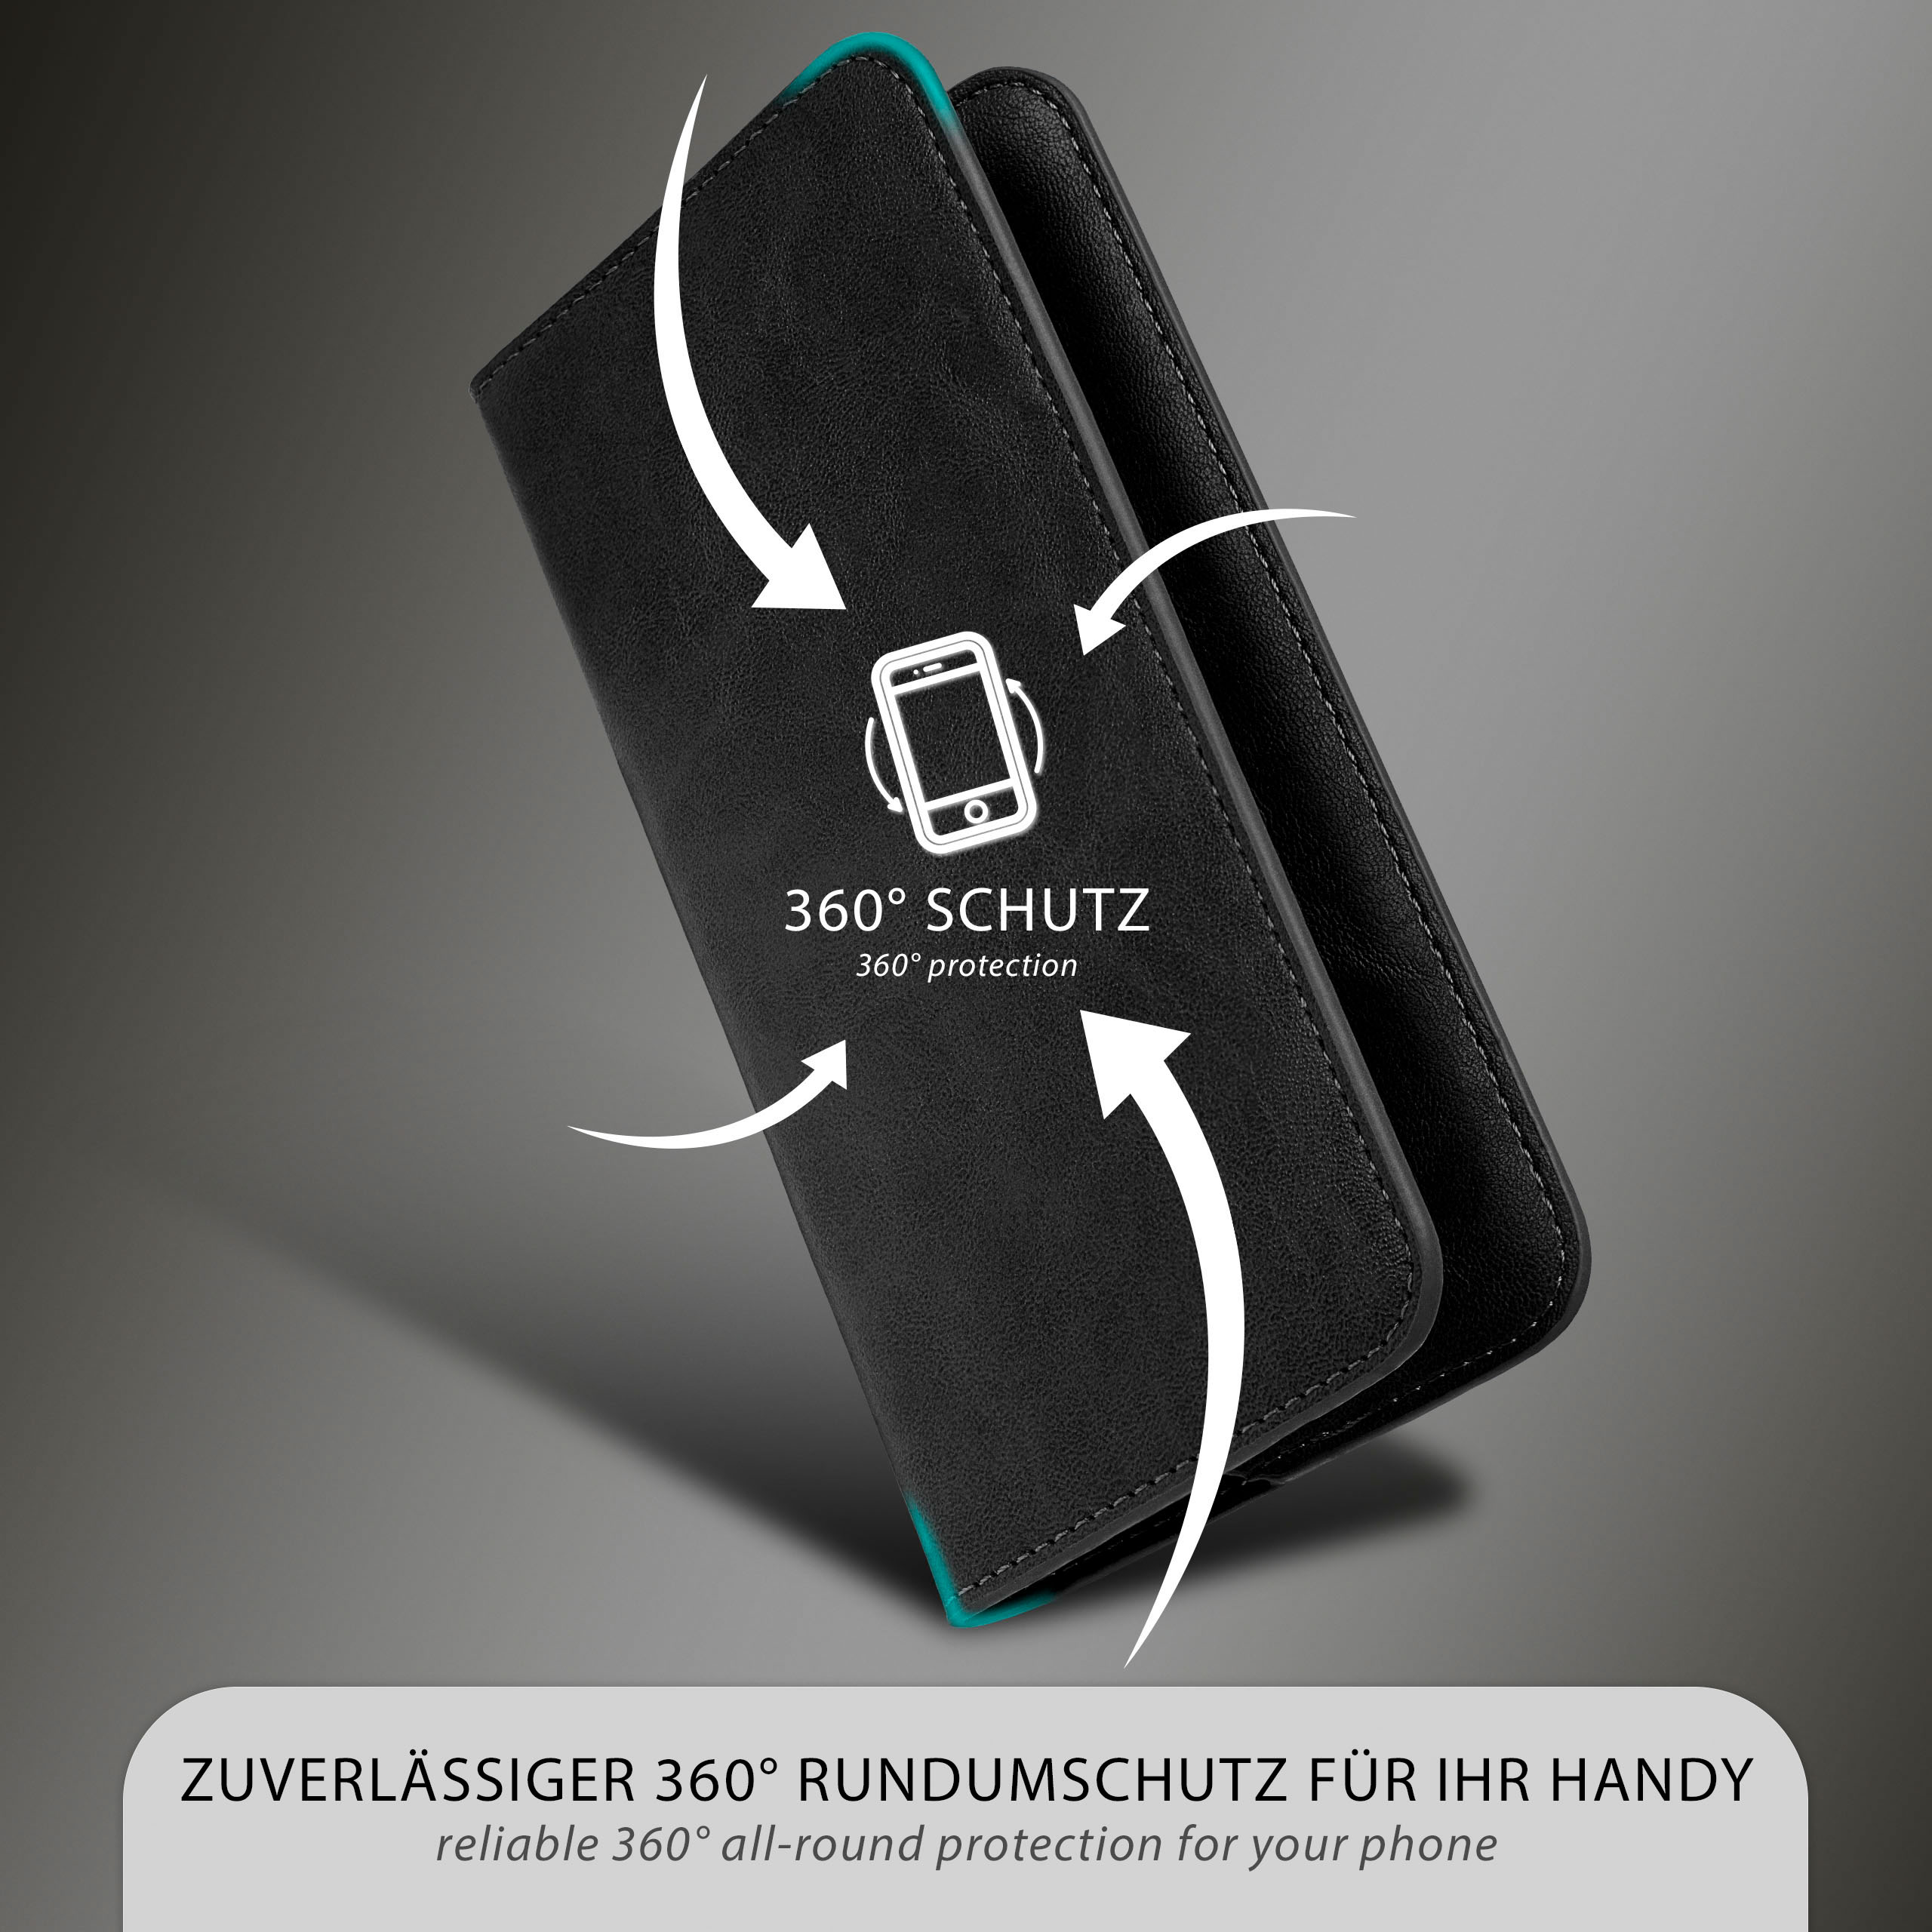 MOEX Purse Case, FE FE 5G, Cover, Flip S20 Galaxy Schwarz / Samsung